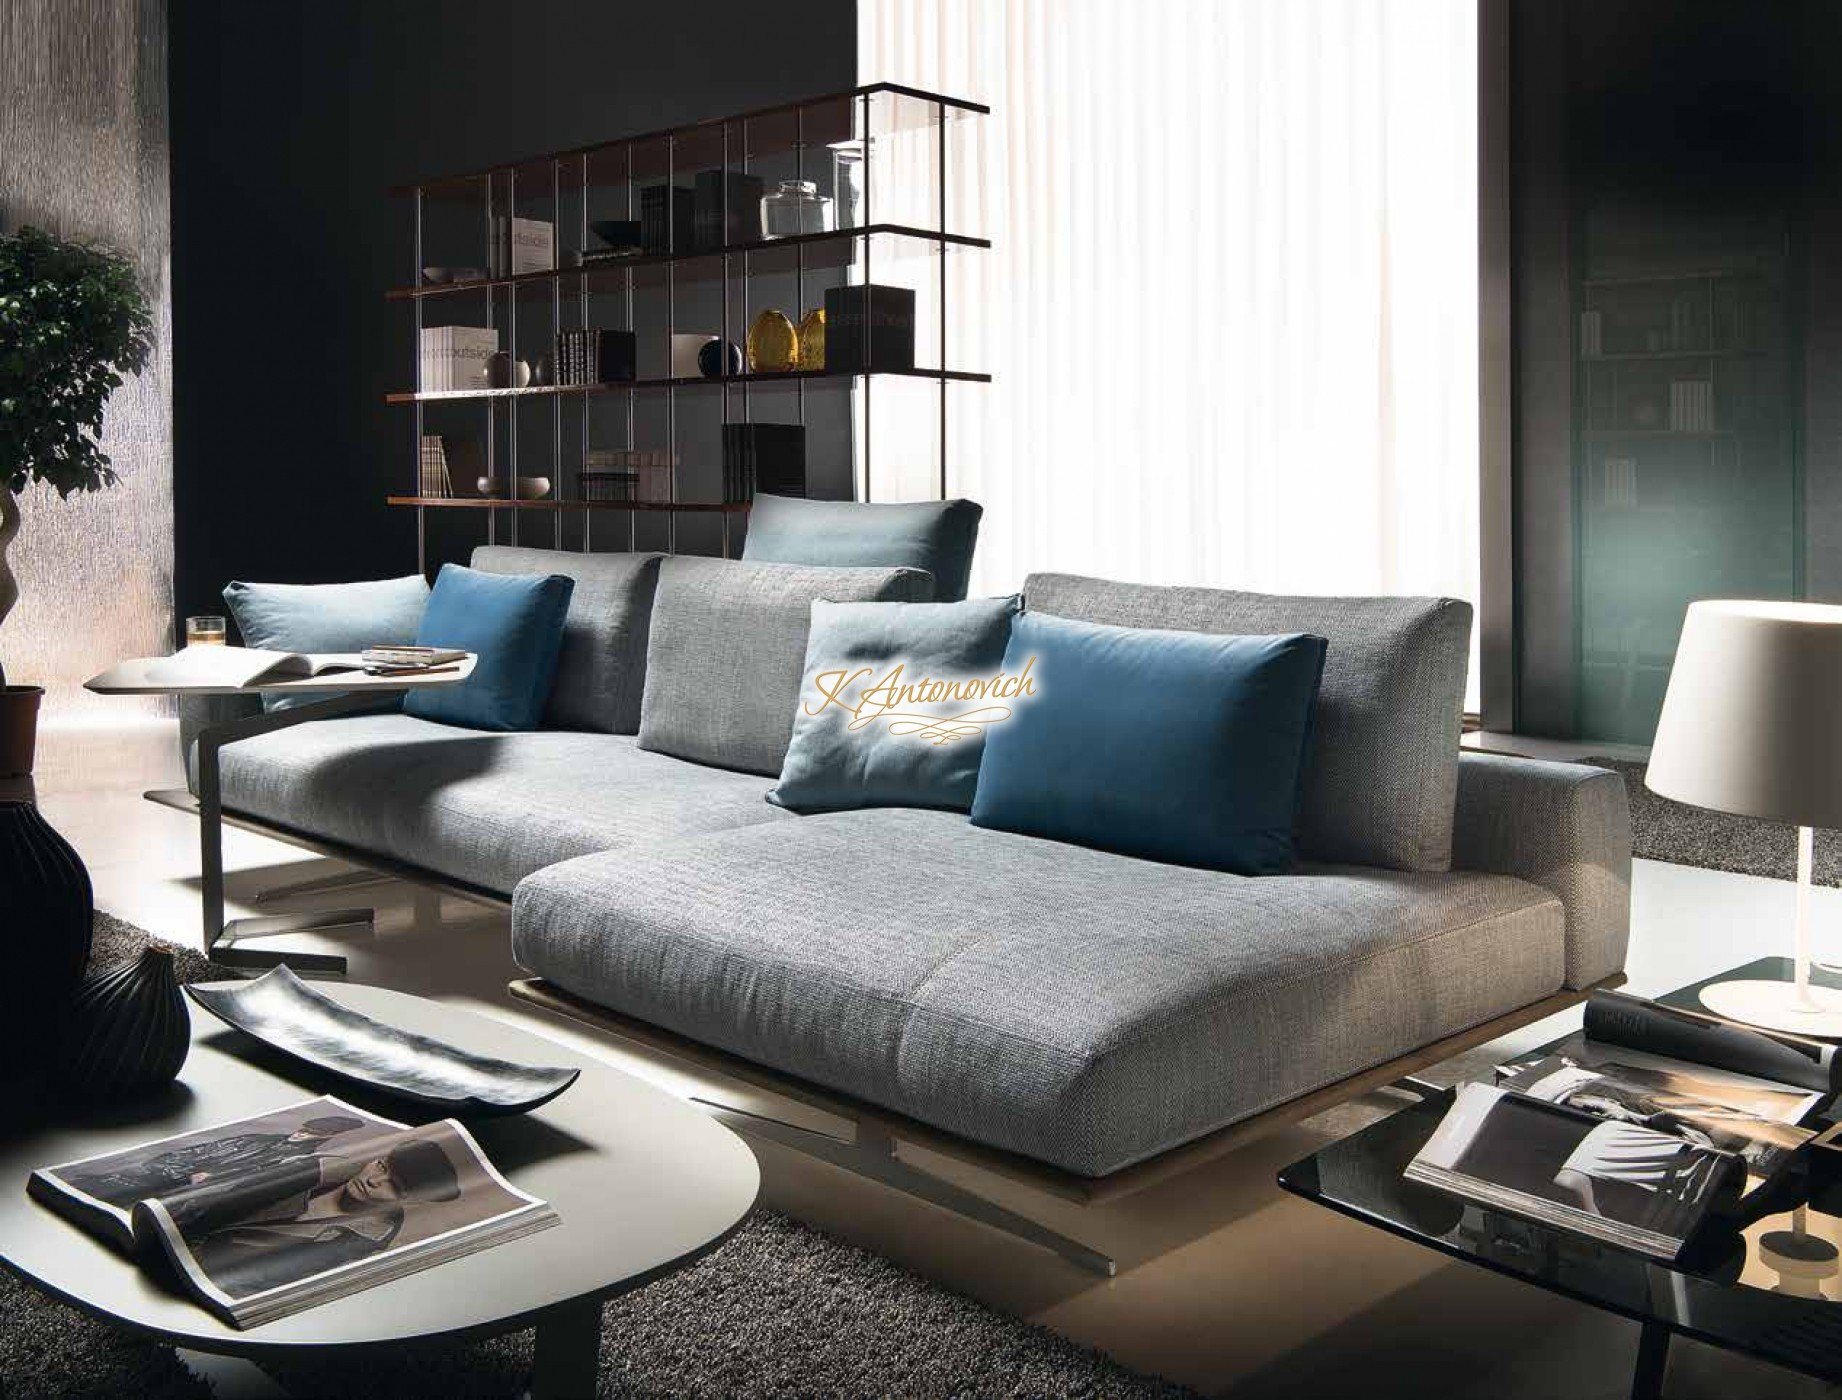 Modern italian living room furniture - luxury interior ...